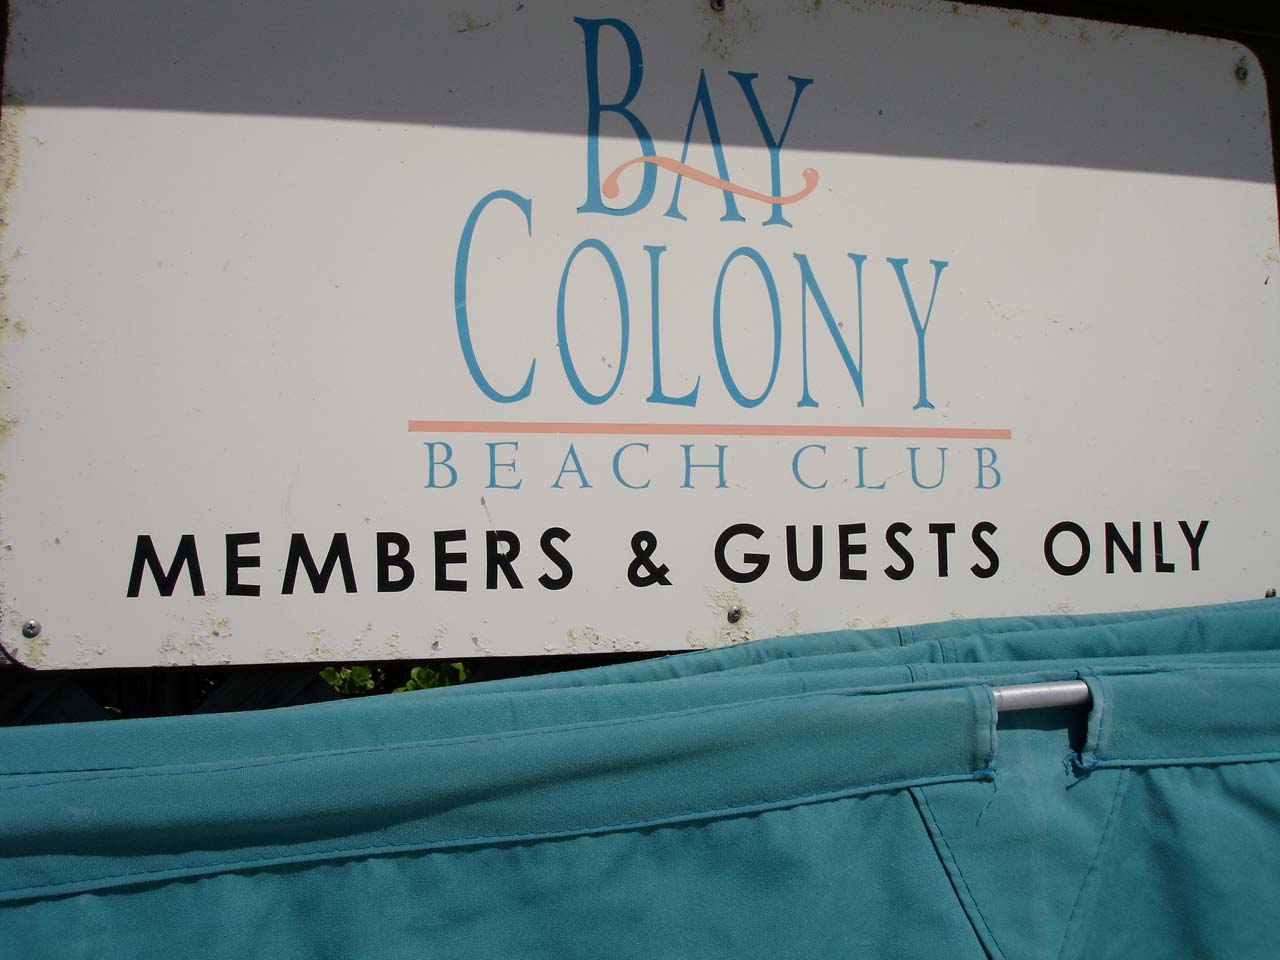 BAY COLONY Signage